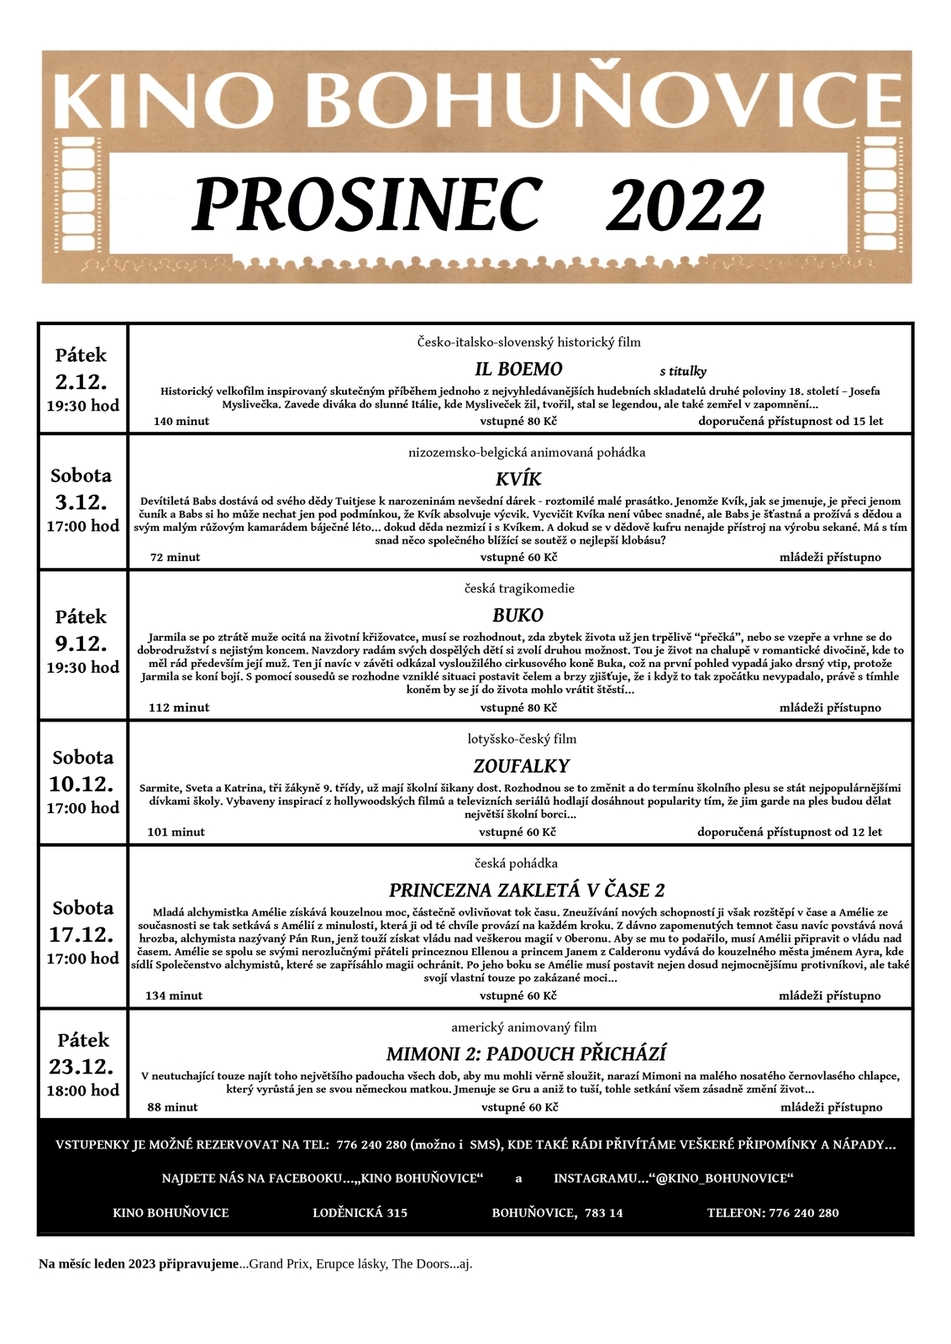 PROSINEC 2022.jpg